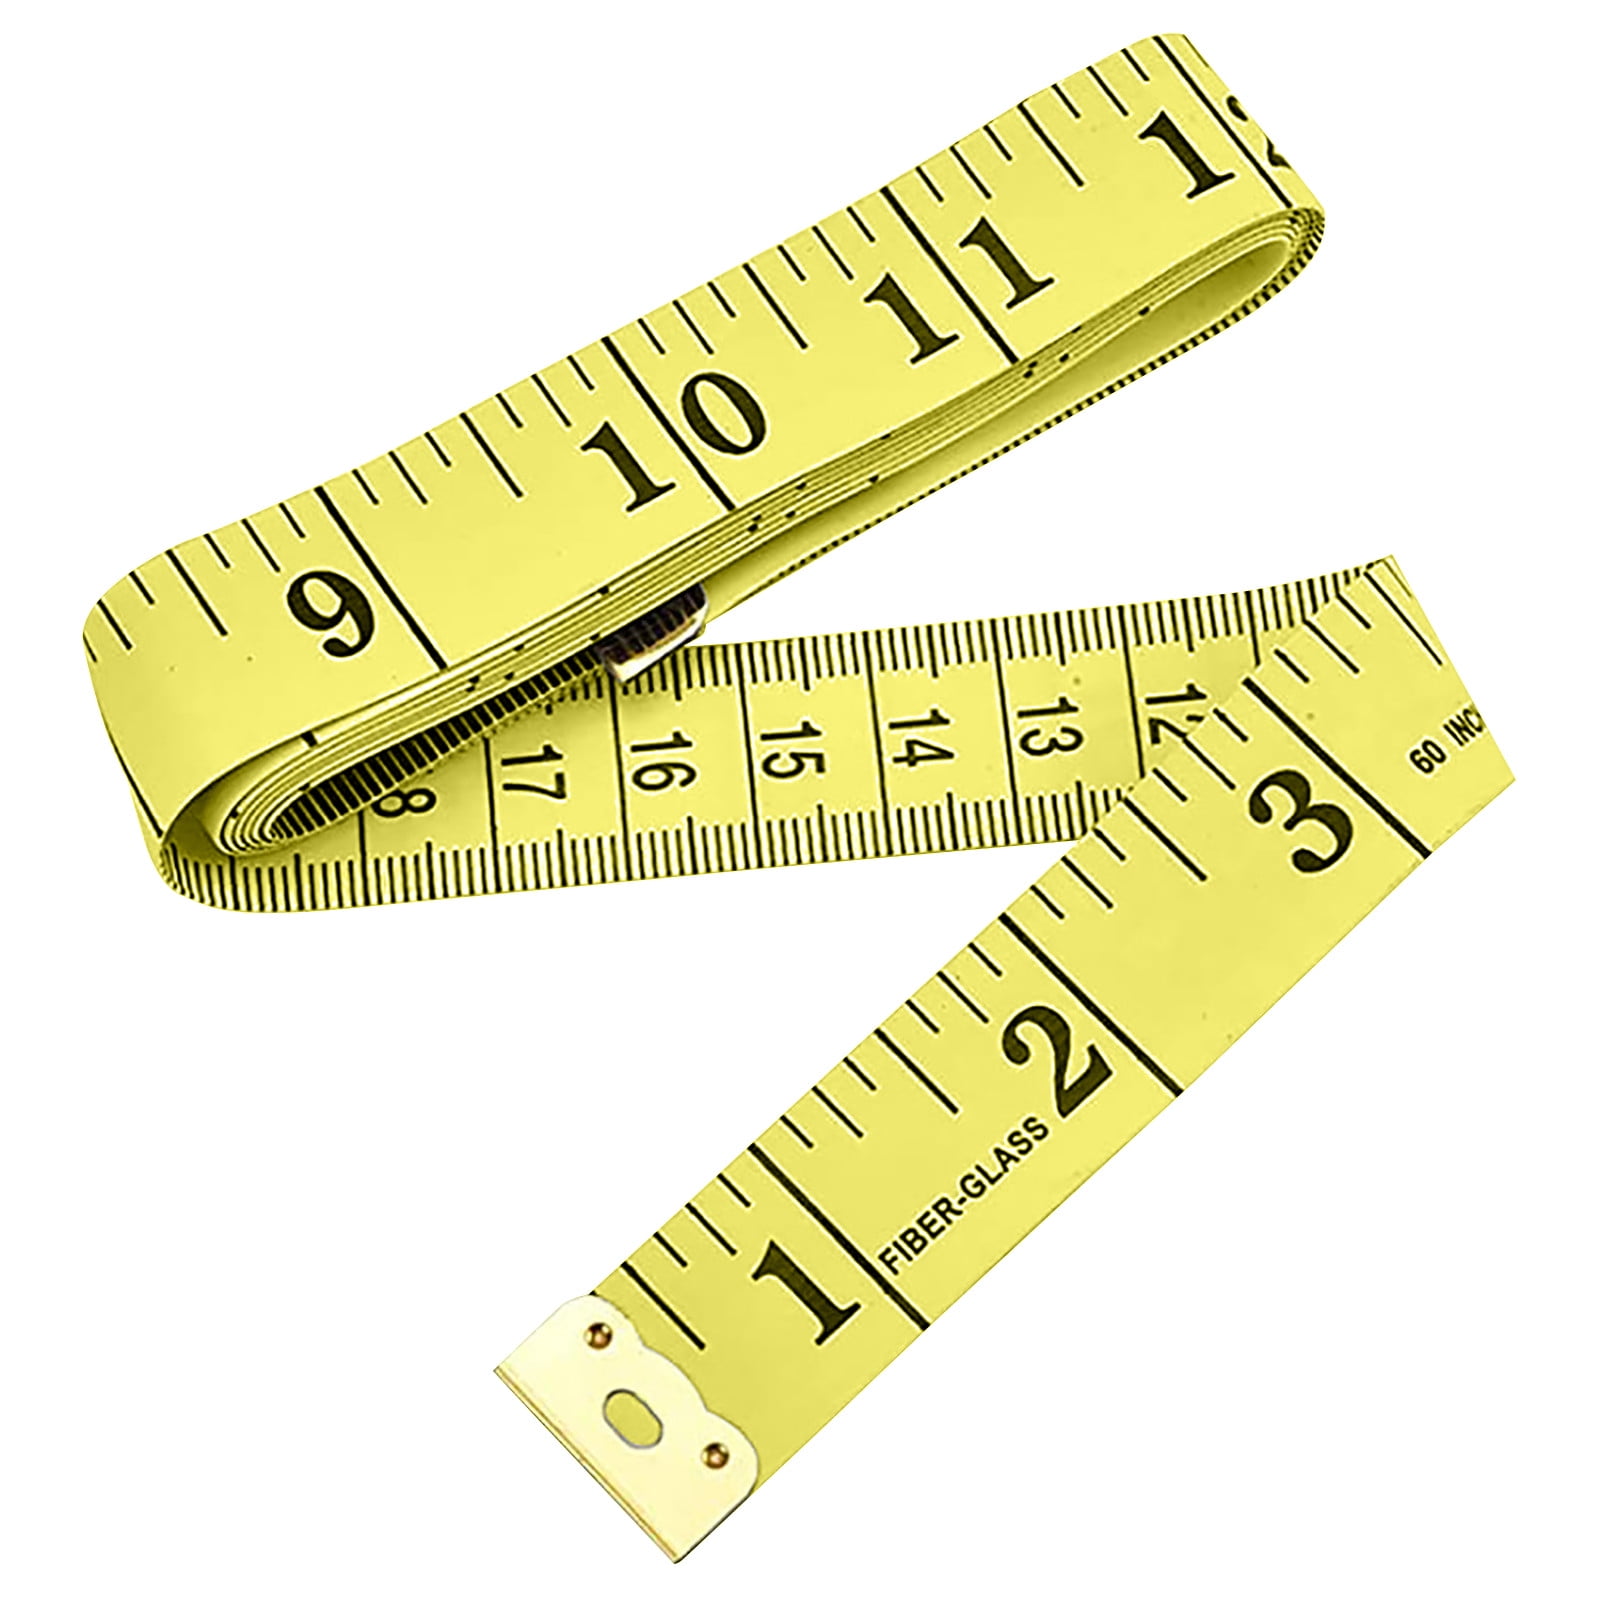 Wefuesd Crewneck T Shirt Alignment Ruler PVC Sewing Collar Measuring Clothes Tool Ruler Set Crewneck T Shirt Centering Ruler, Measuring Tape, Tools